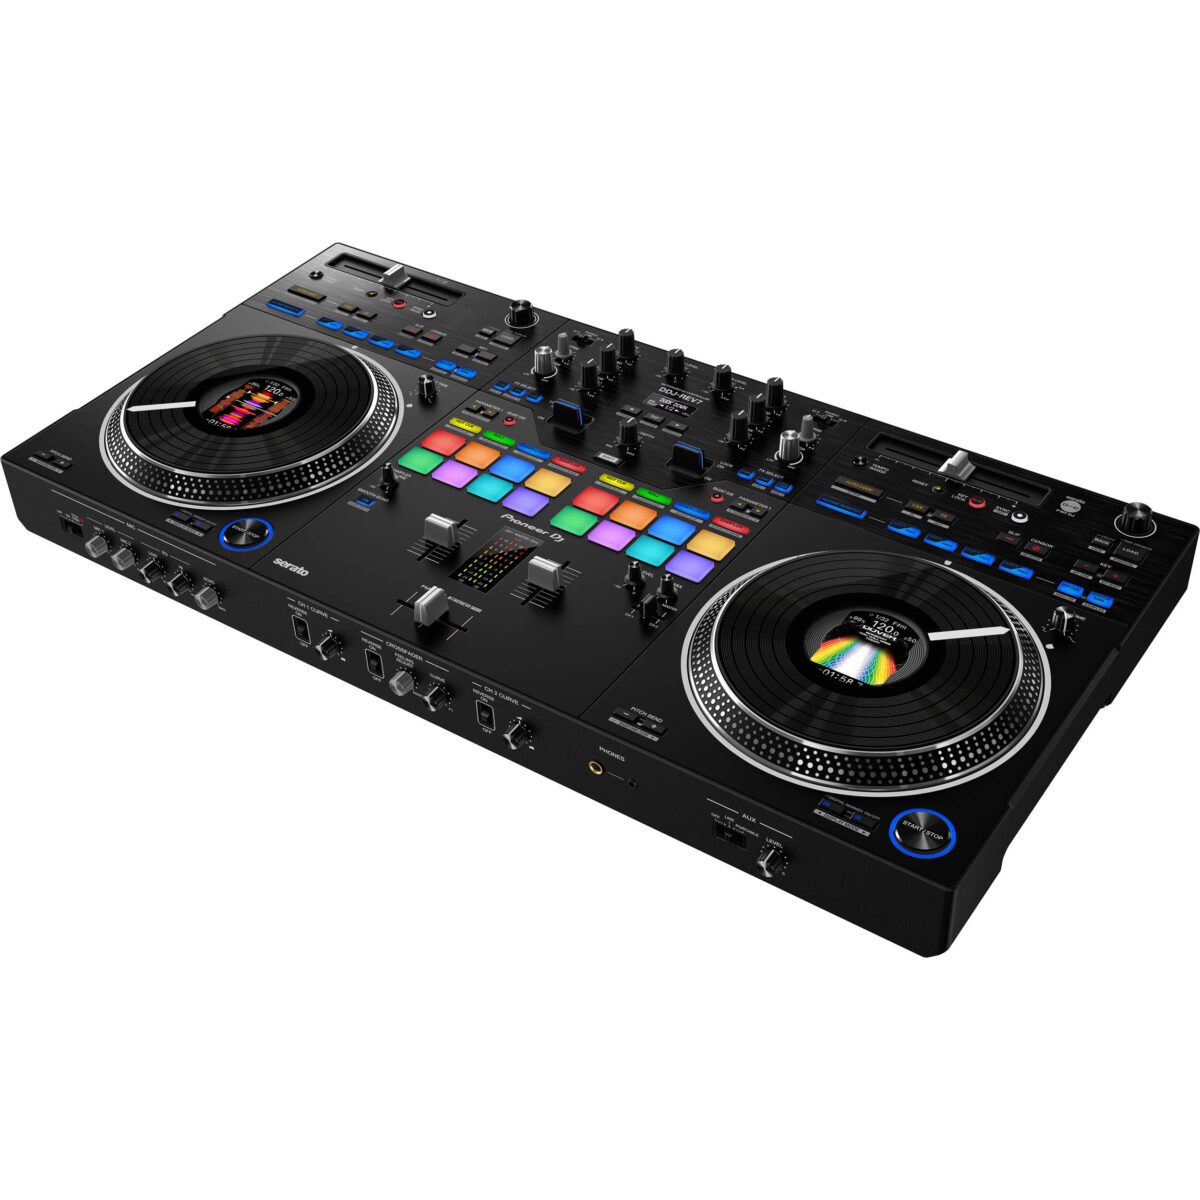 Pioneer DJ DDJ-REV7 2-Channel Serato DJ Pro Controller